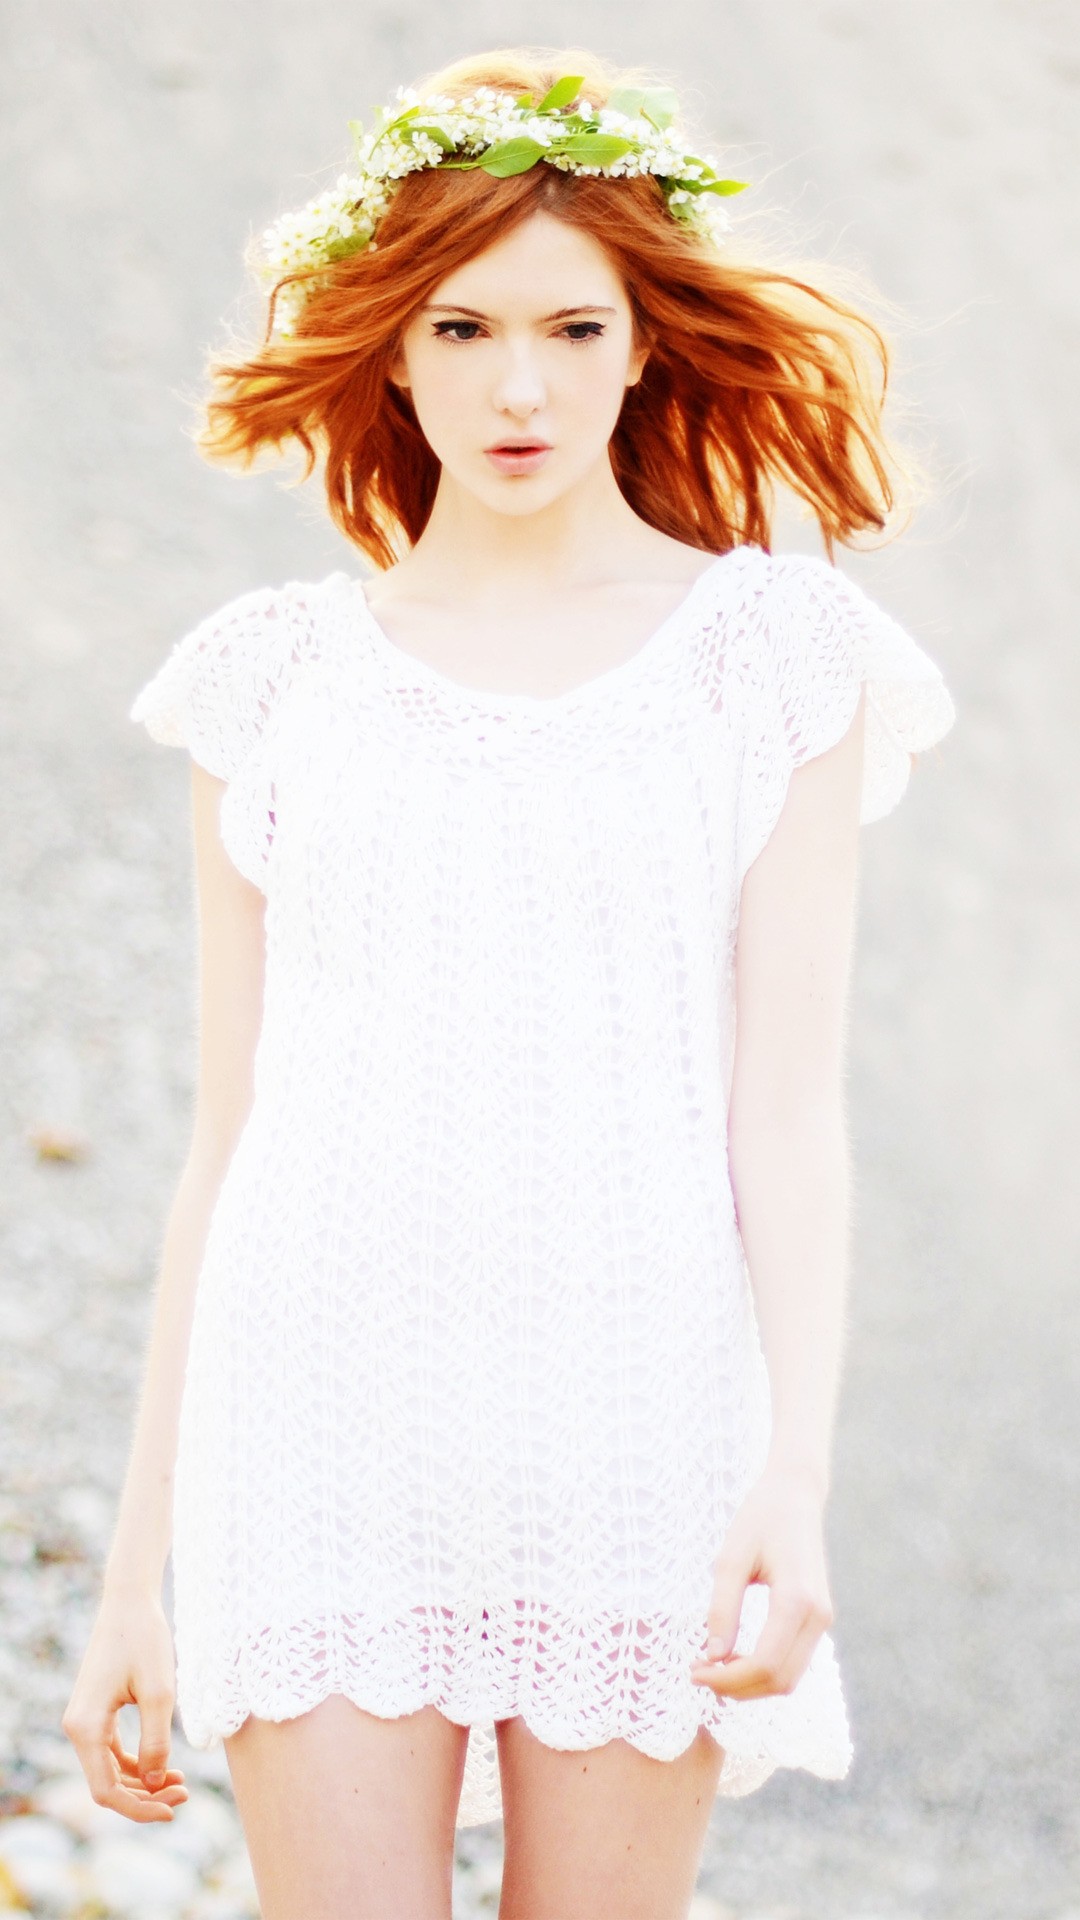 women model ebba zingmark redhead long hair women outdoors flower in hair open mouth white dress Wallpaper